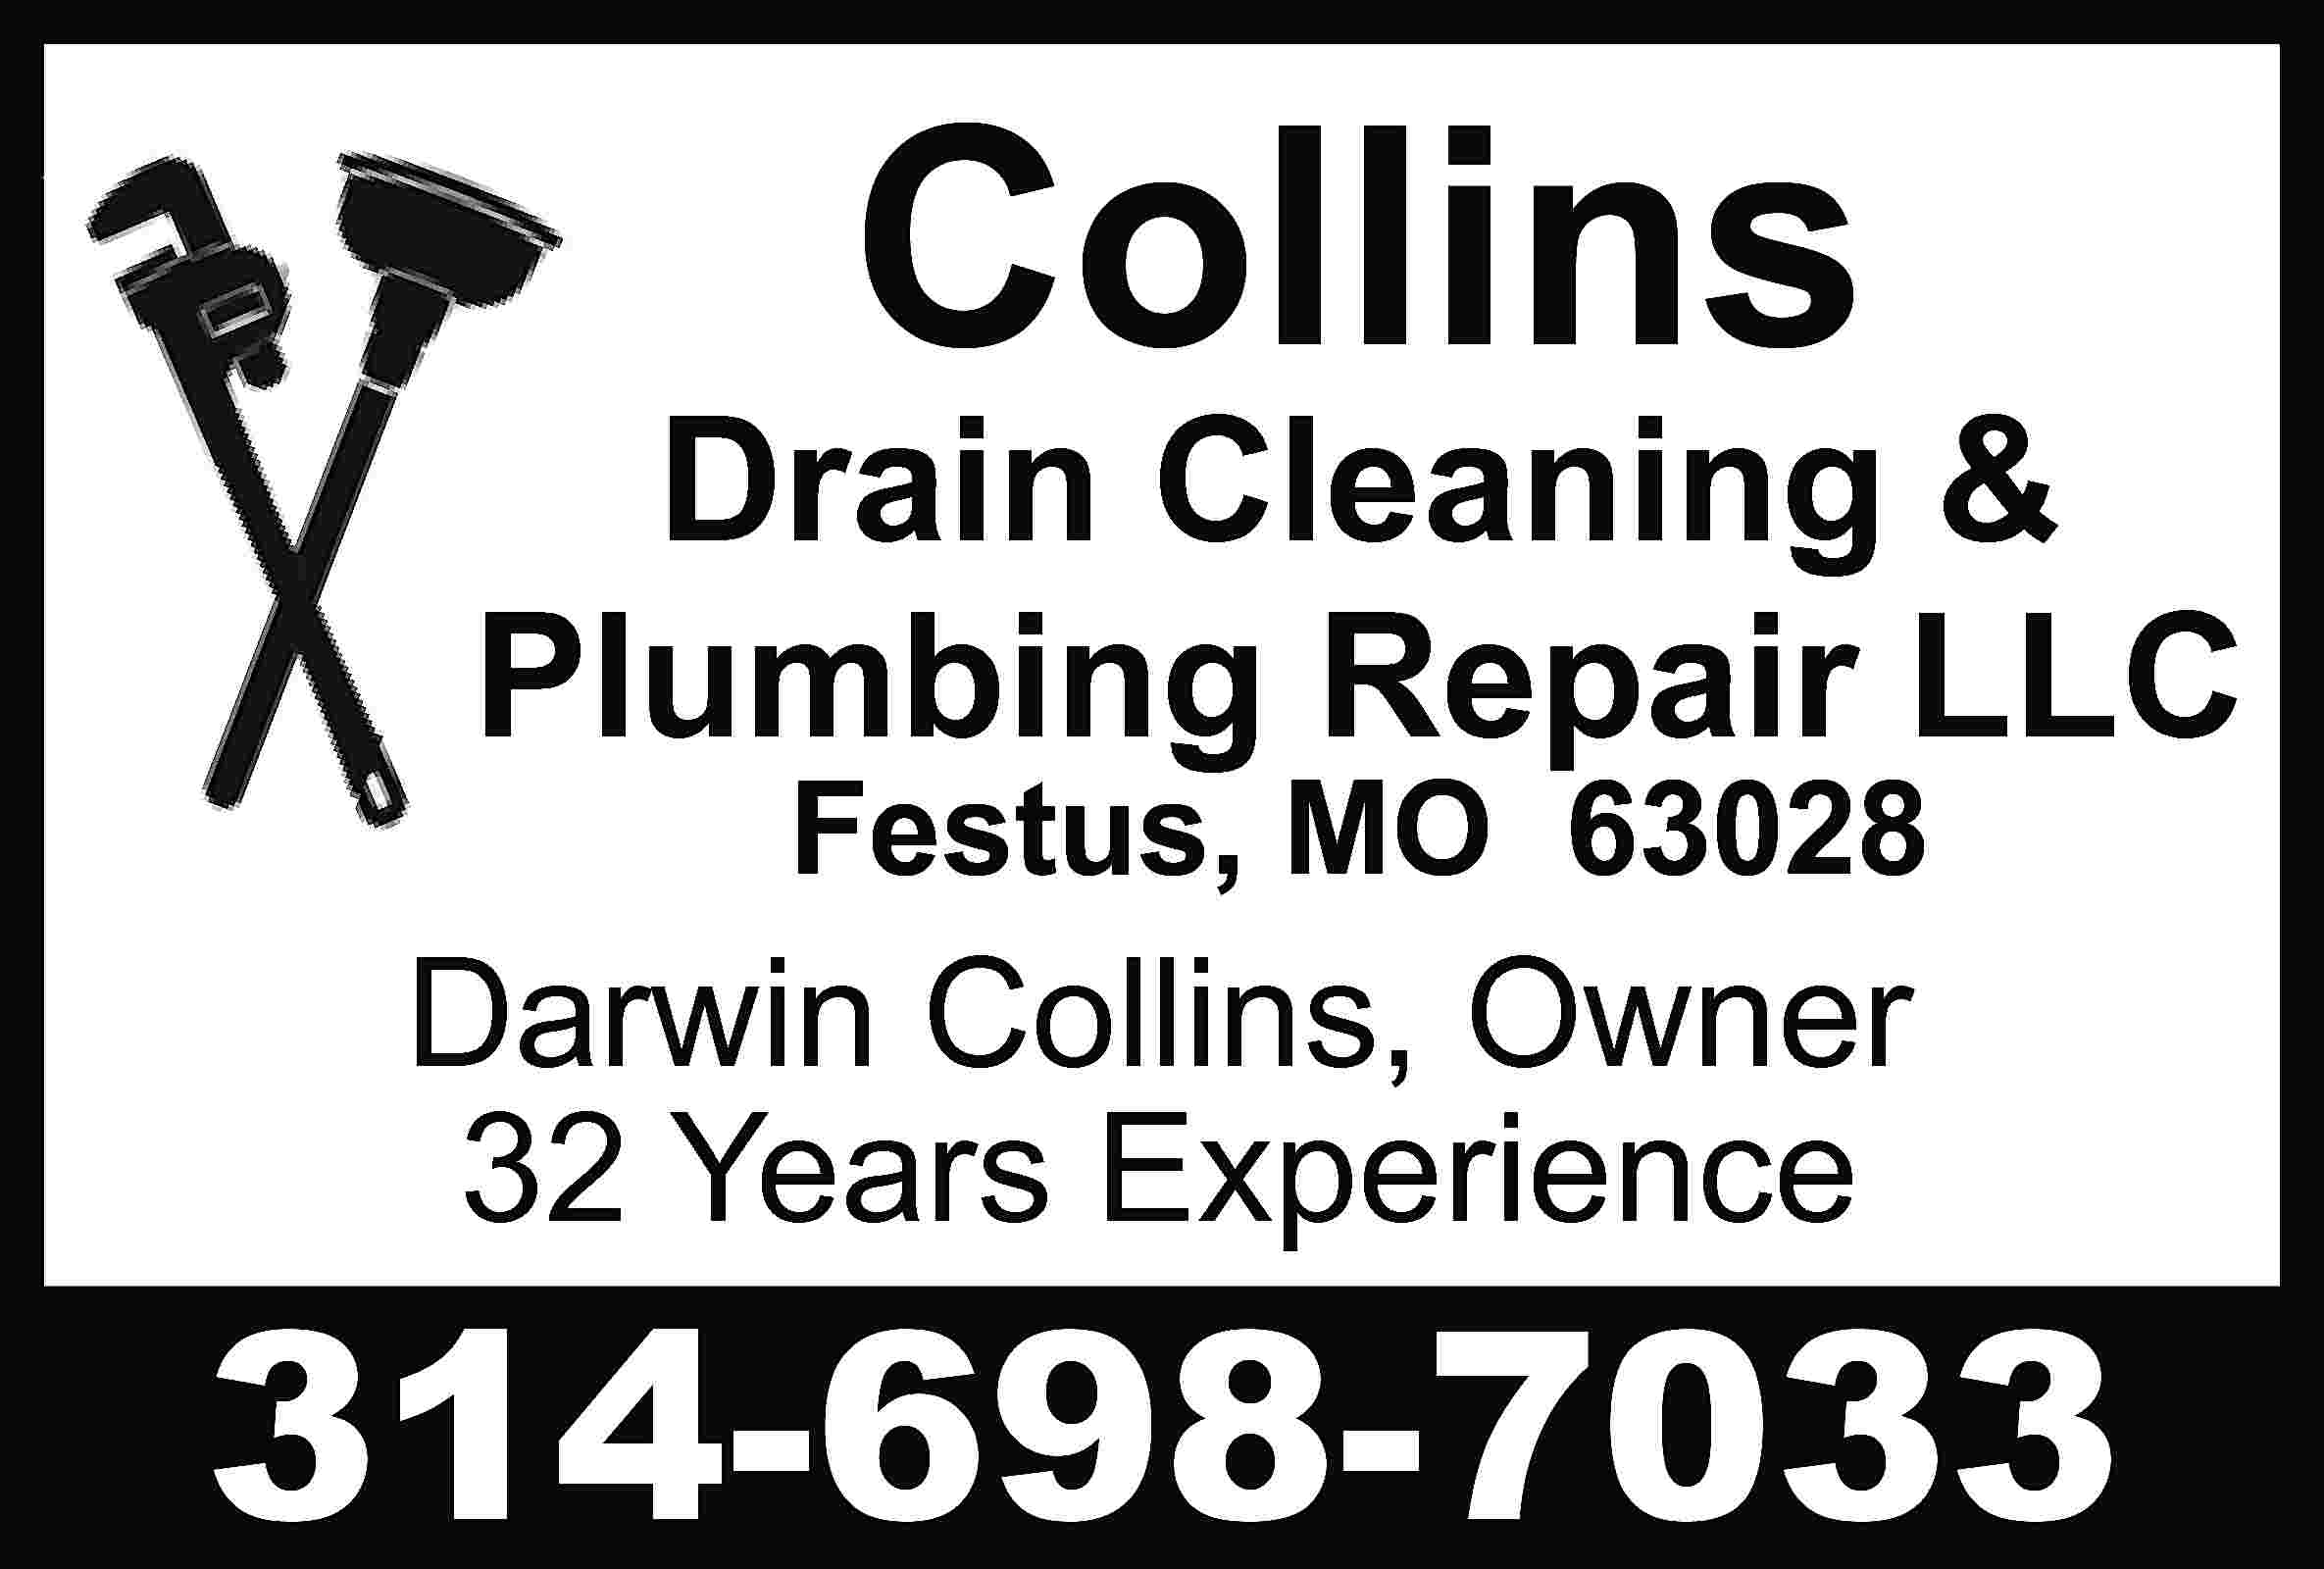 Collins Drain Cleaning & Plumbing  Collins Drain Cleaning & Plumbing Repair LLC Festus, MO 63028 Darwin Collins, Owner 32 Years Experience 314-698-7033